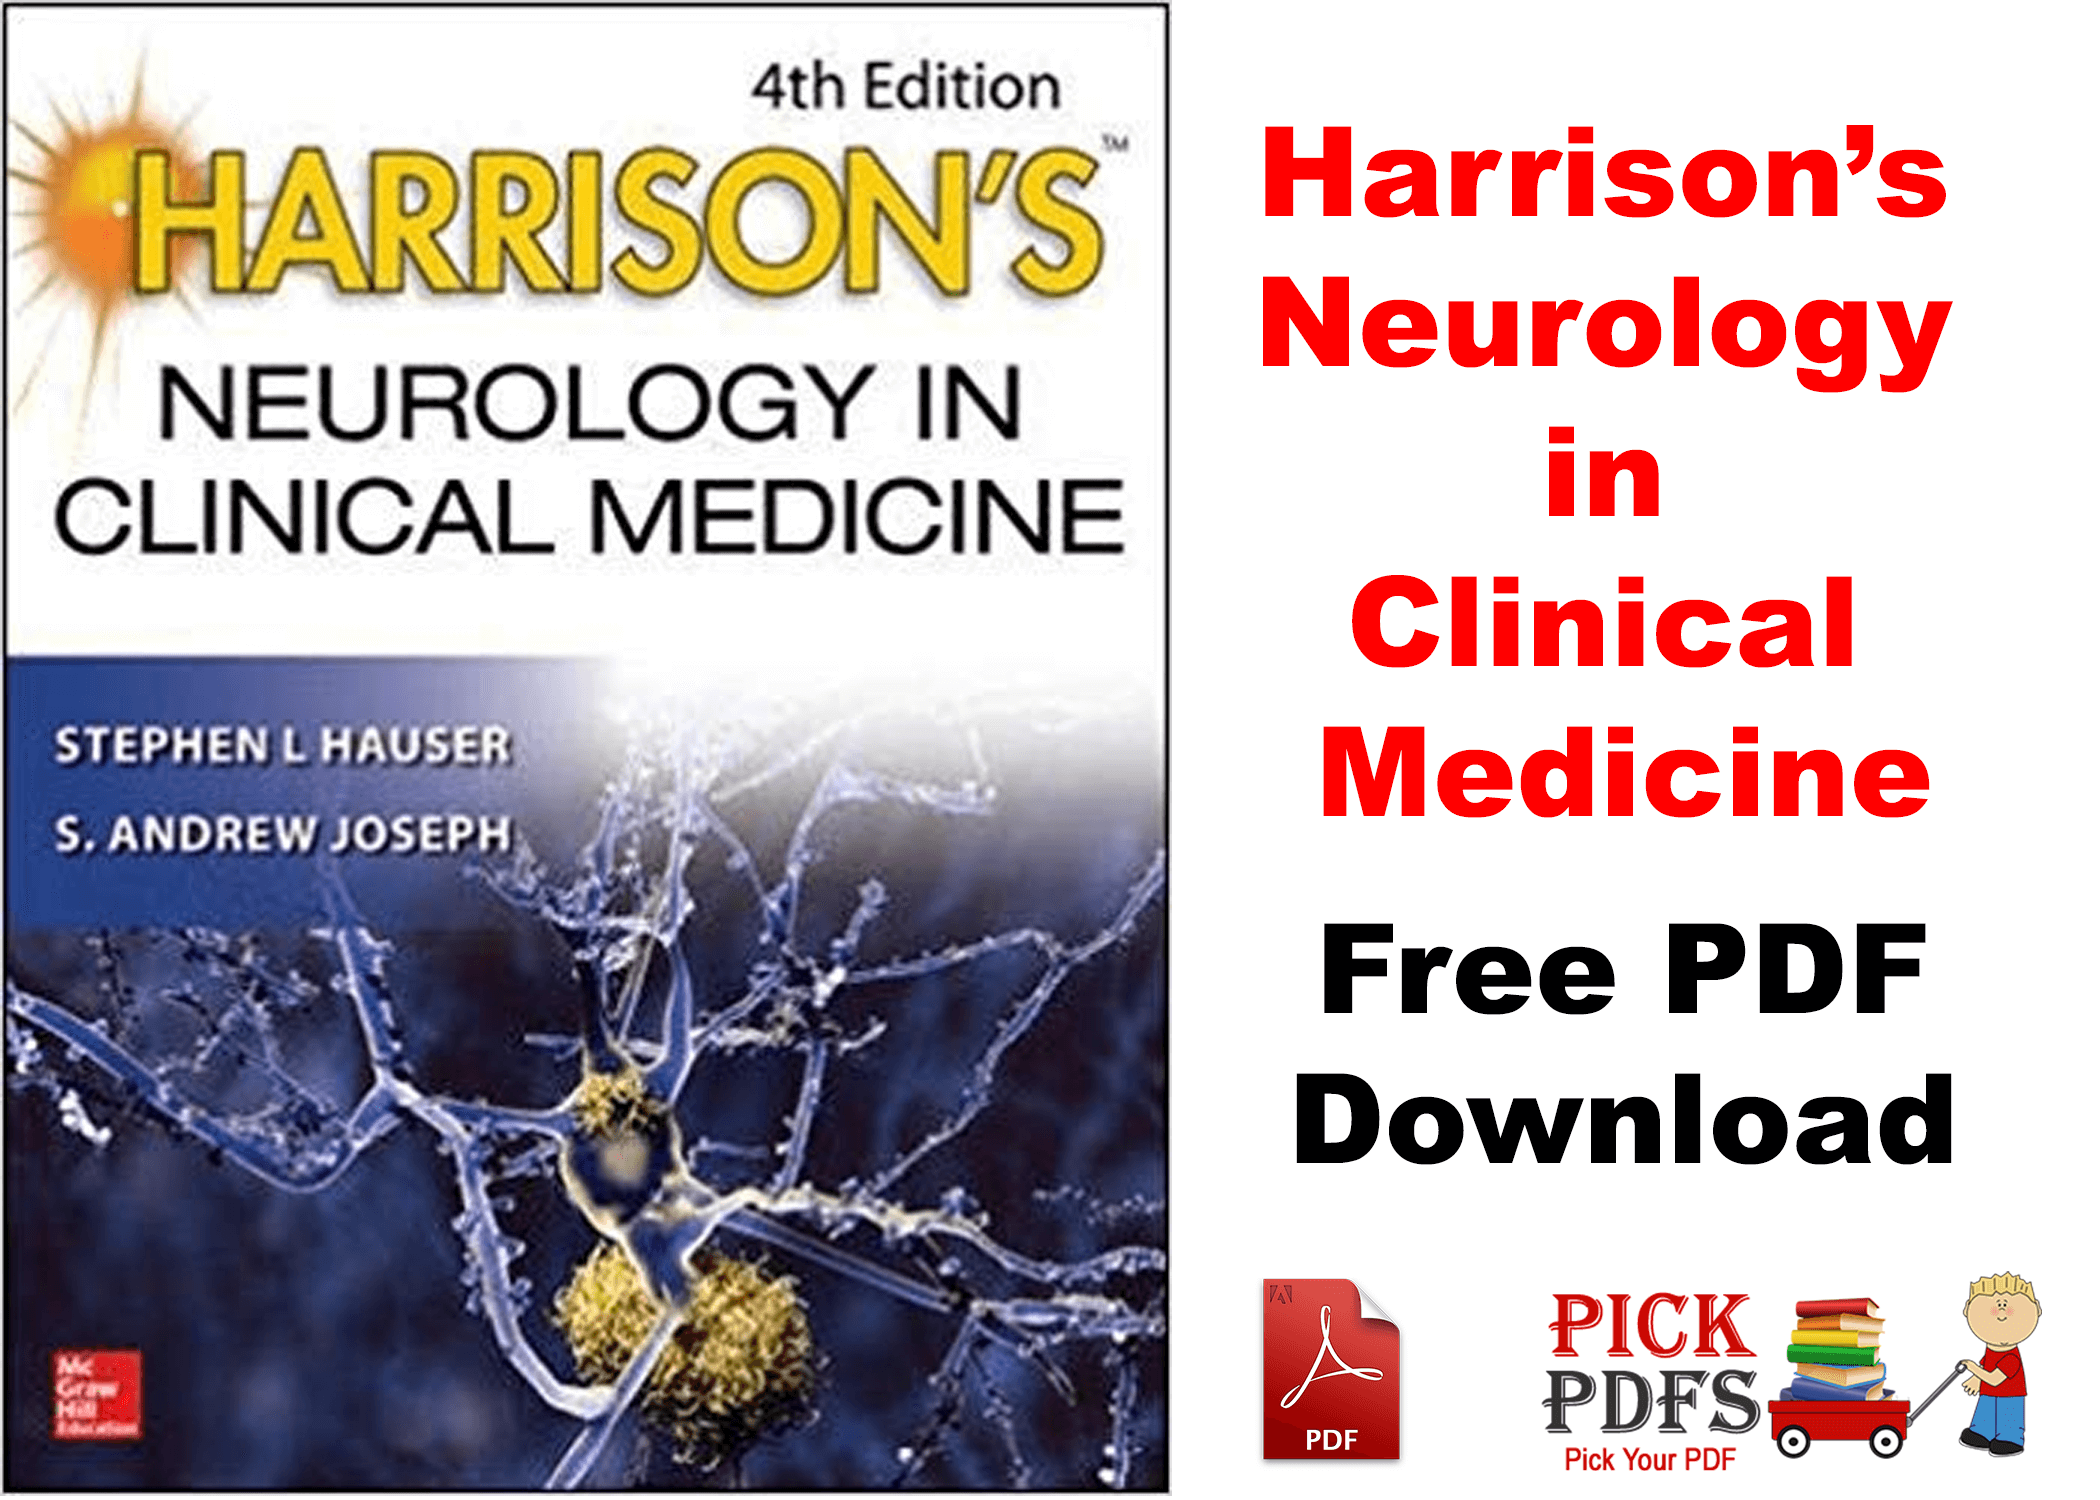 https://pickpdfs.com/the-comorehensive-neurosurgery-board-preparation-book-pdf-free-download2021/